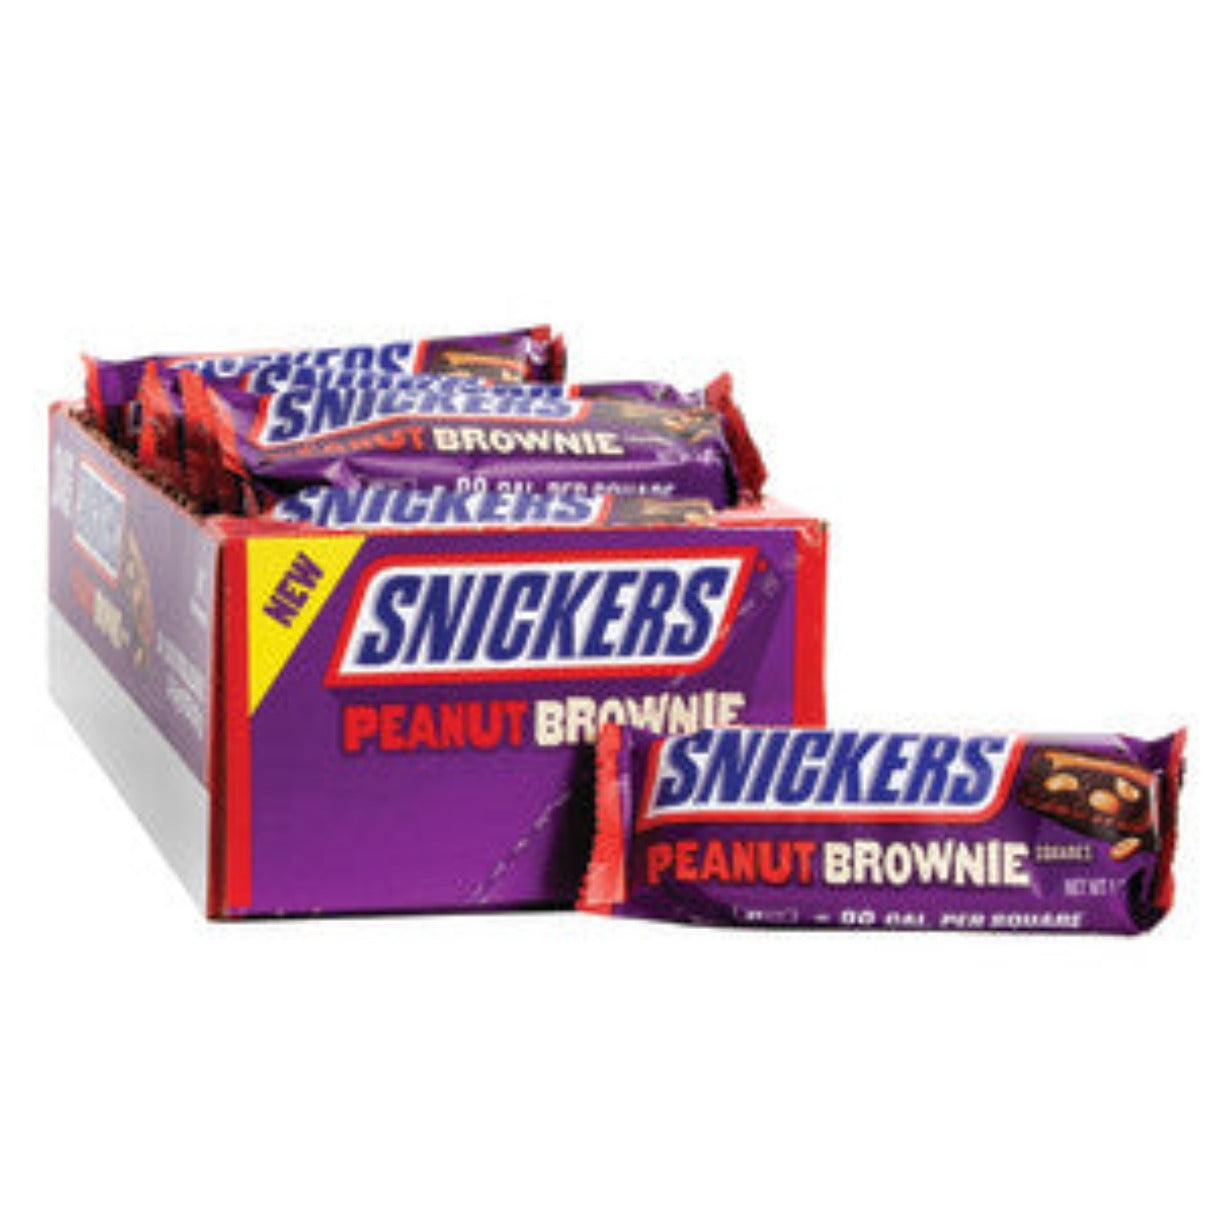 Snickers Peanut Brownie 1.2oz - 24ct